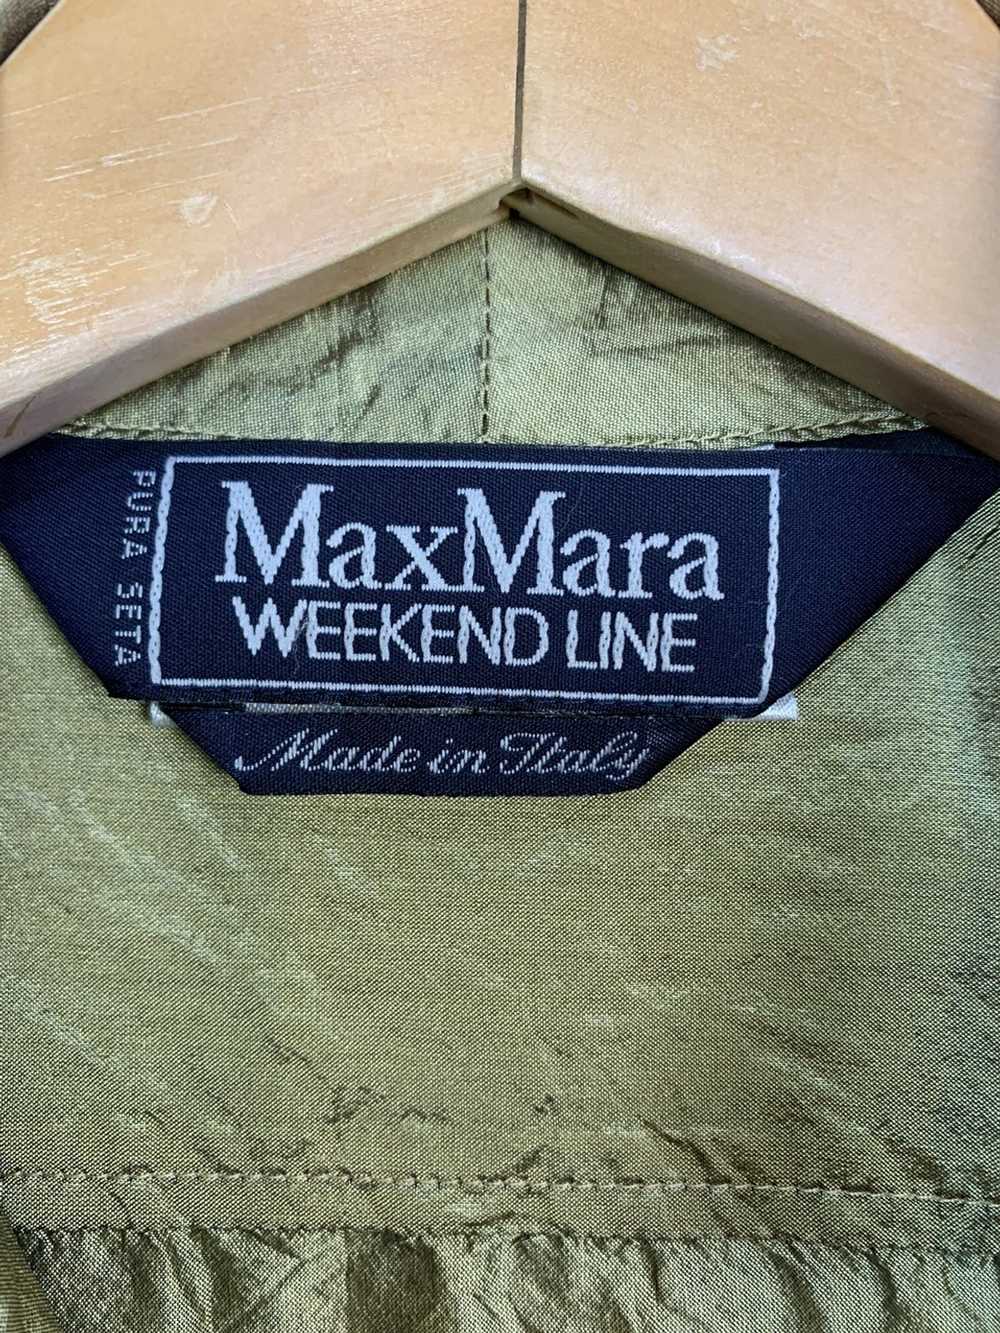 Max Mara Maxmara Weekend Line Silk Shirt - image 12